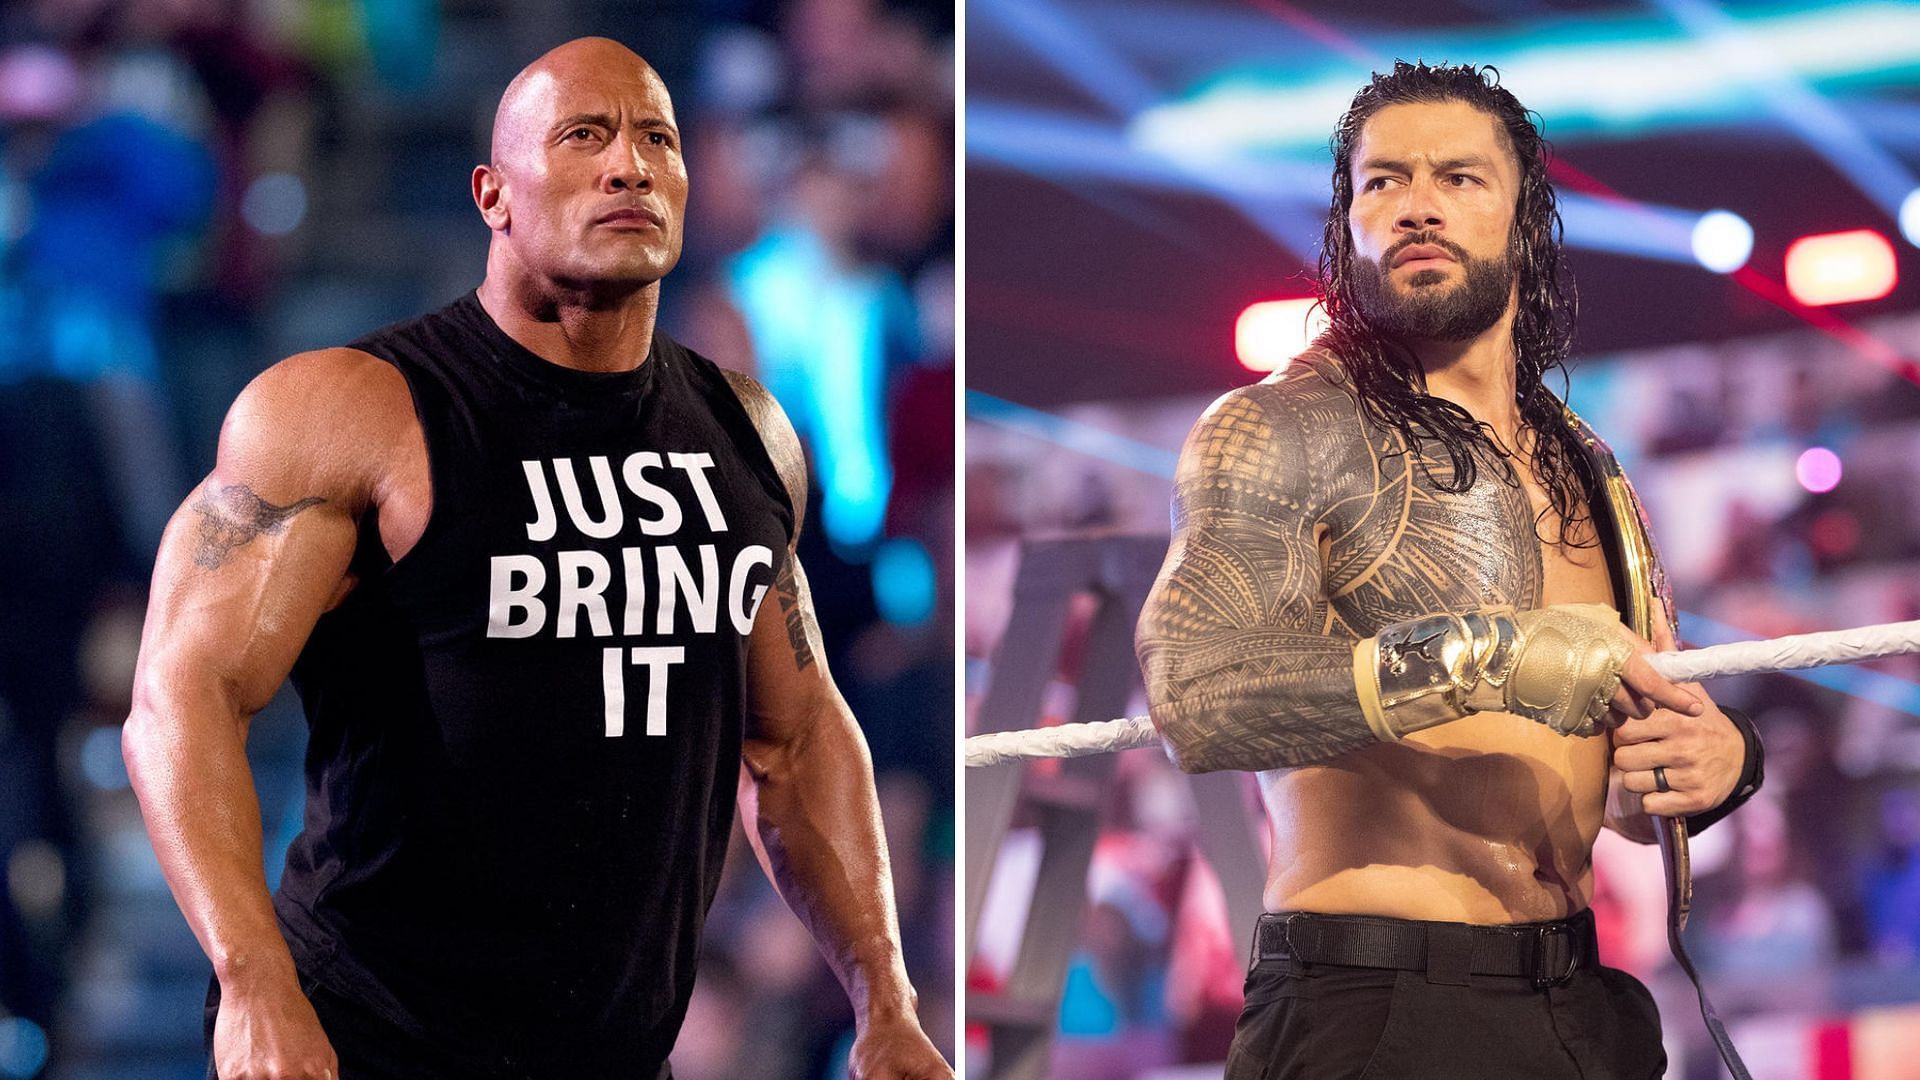 The Rock vs. Roman Reigns could headline WrestleMania 40